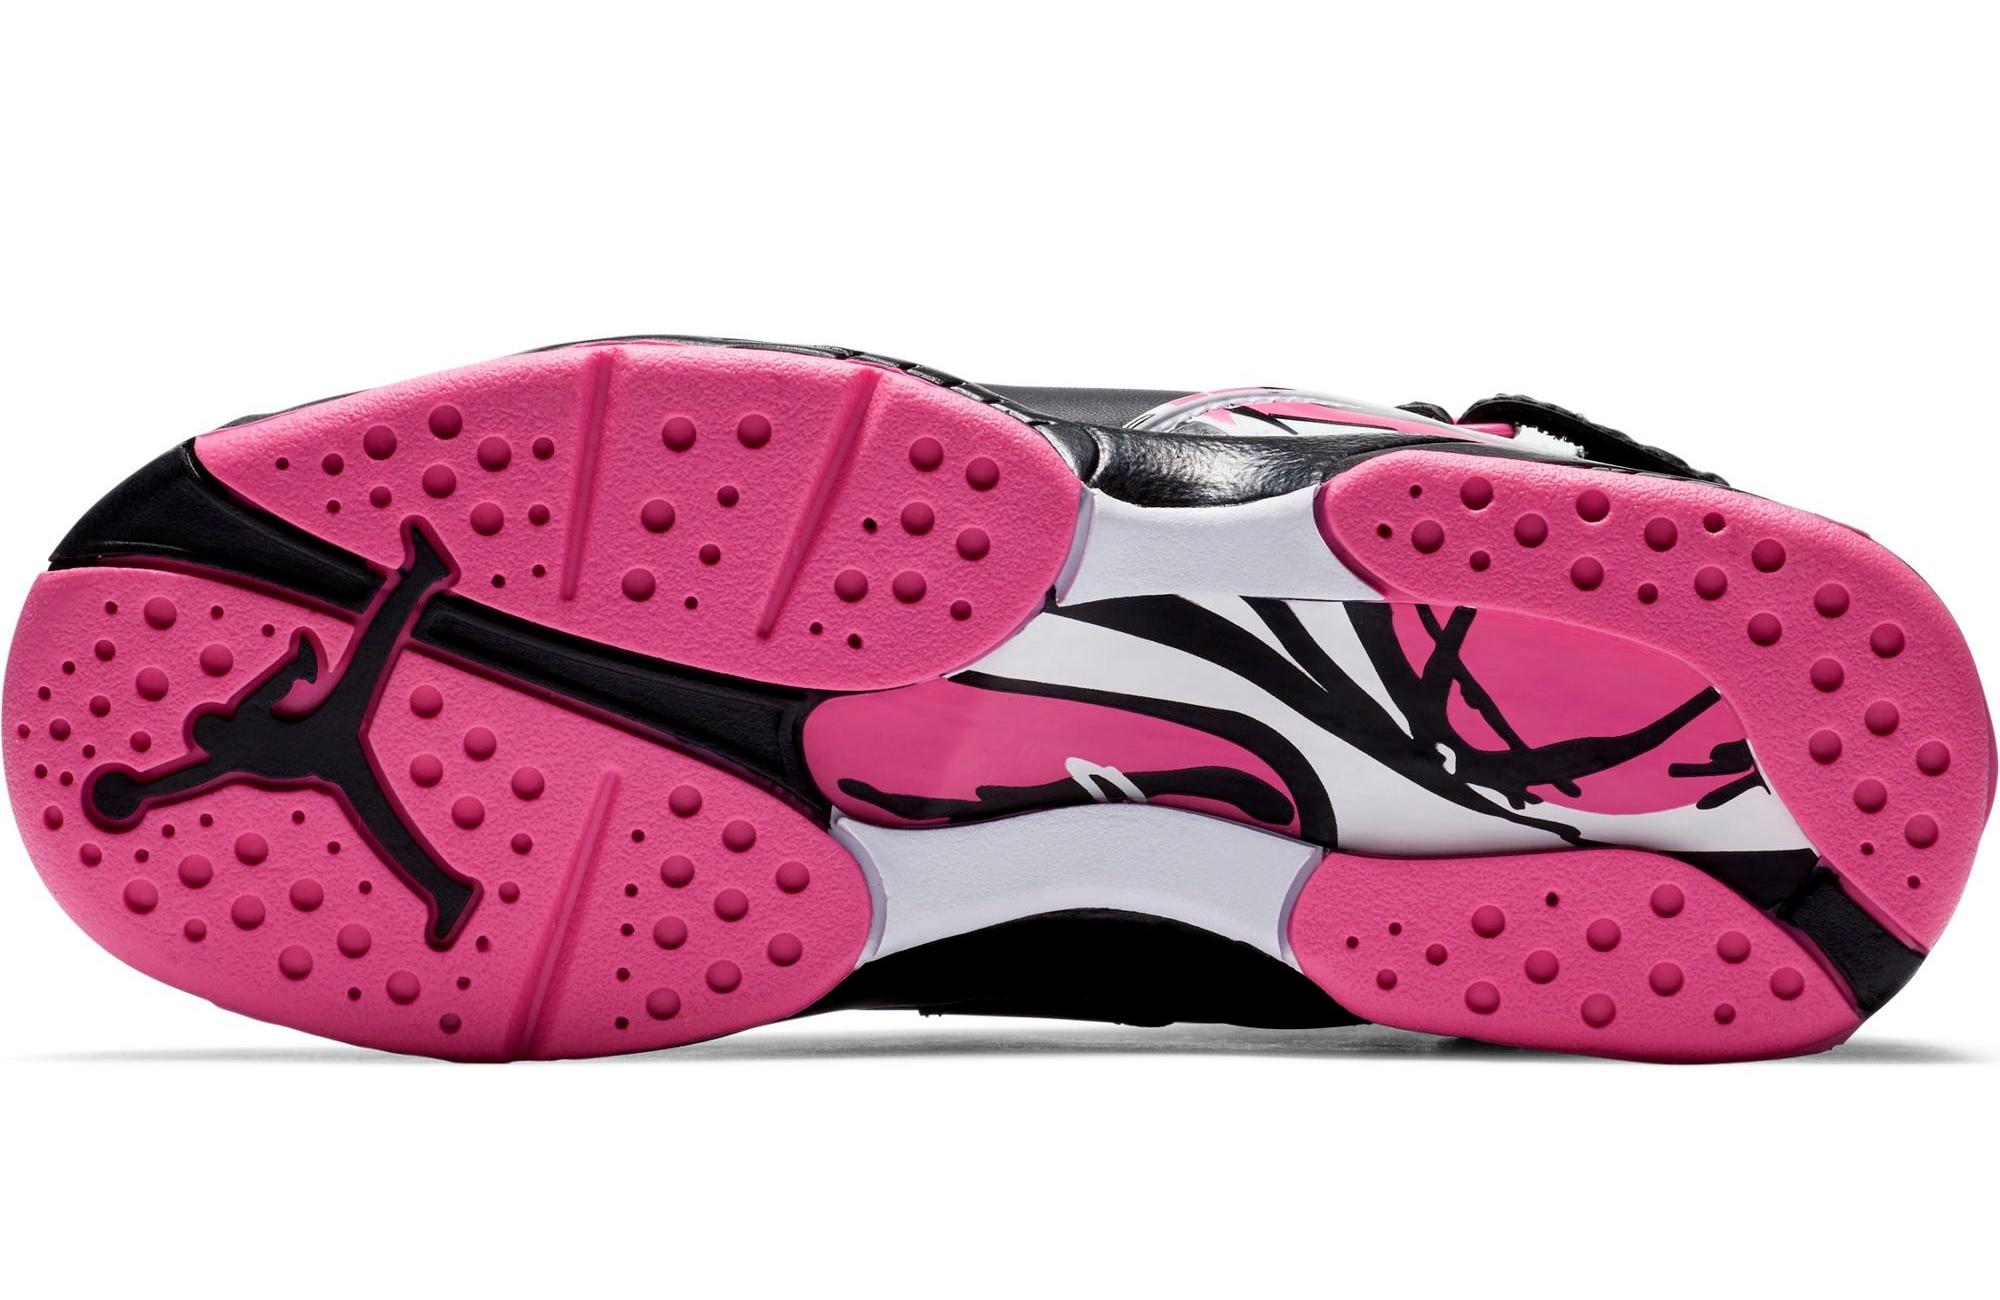 Sneakers Release- Air Jordan 8 Retro “Pinksicle” Black/Pink Girls’ Shoe